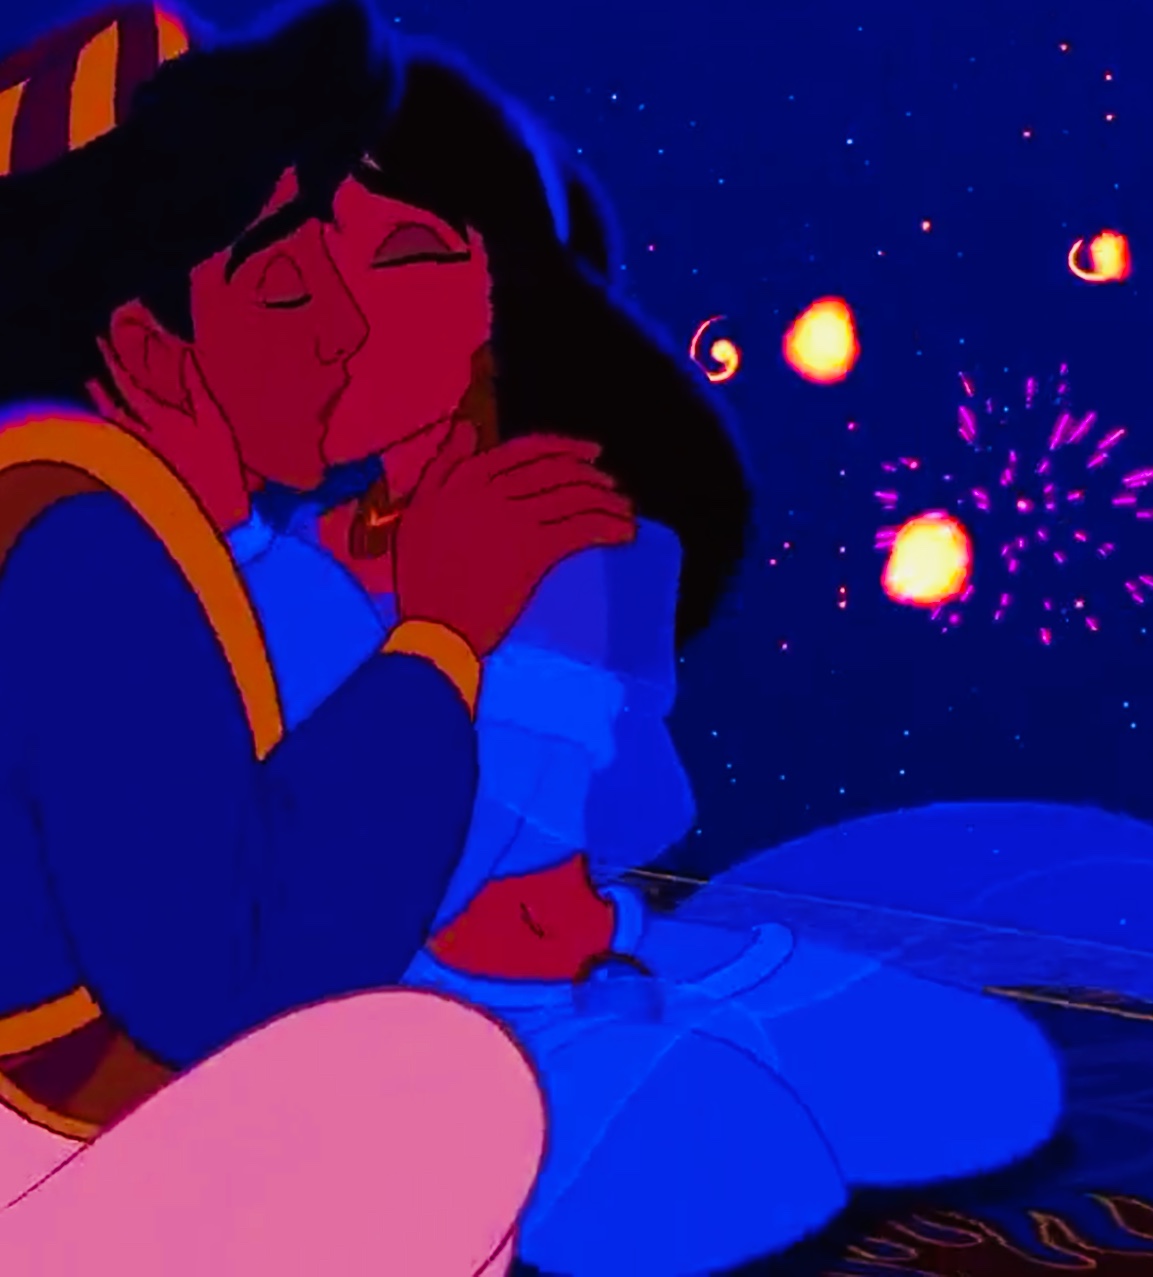 aladdin and jasmine in love